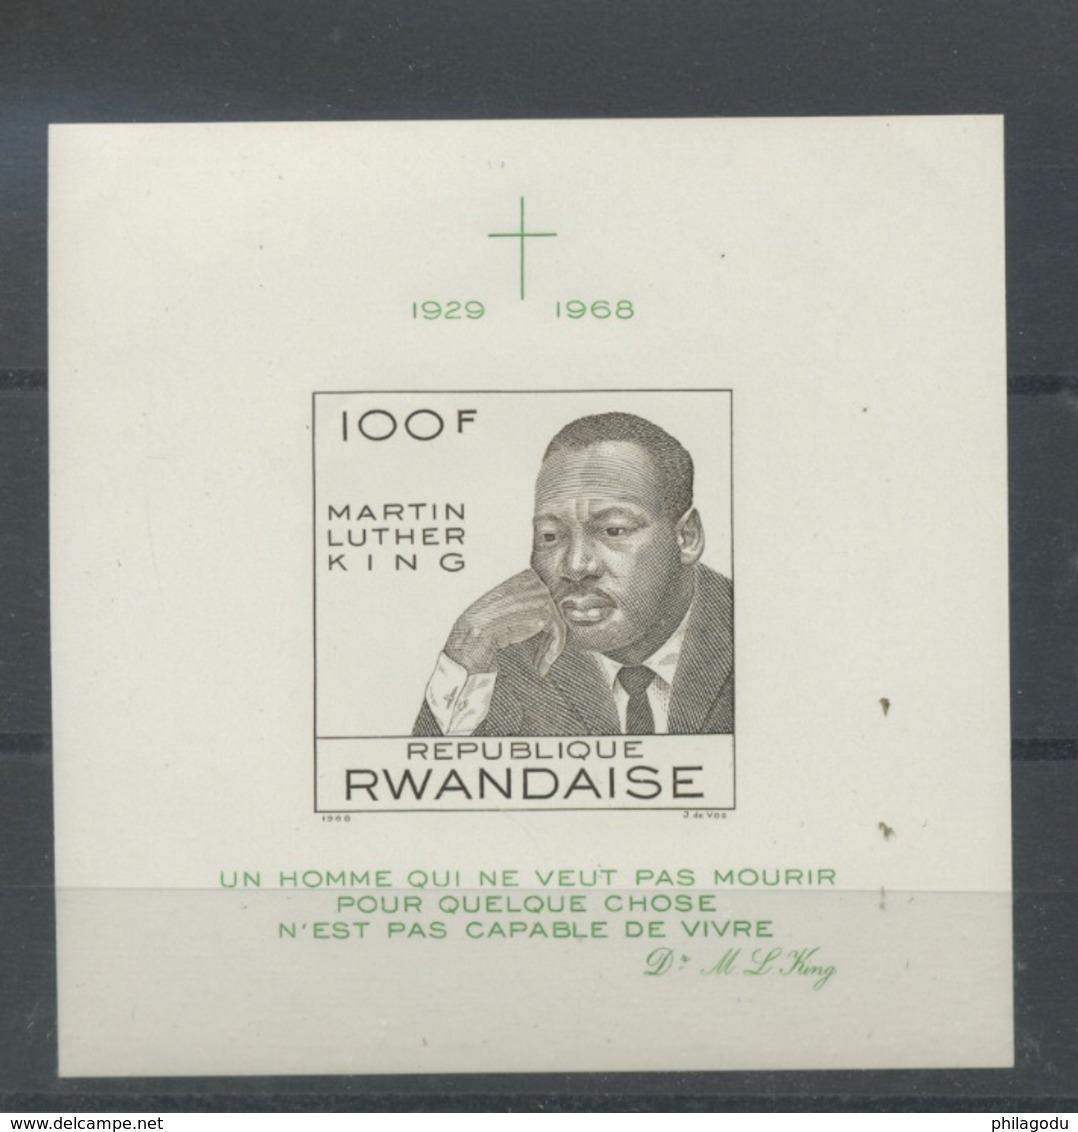 1968 Martin Luther King  RWANDA Bloc NON DENTELE  Imperforate - Martin Luther King